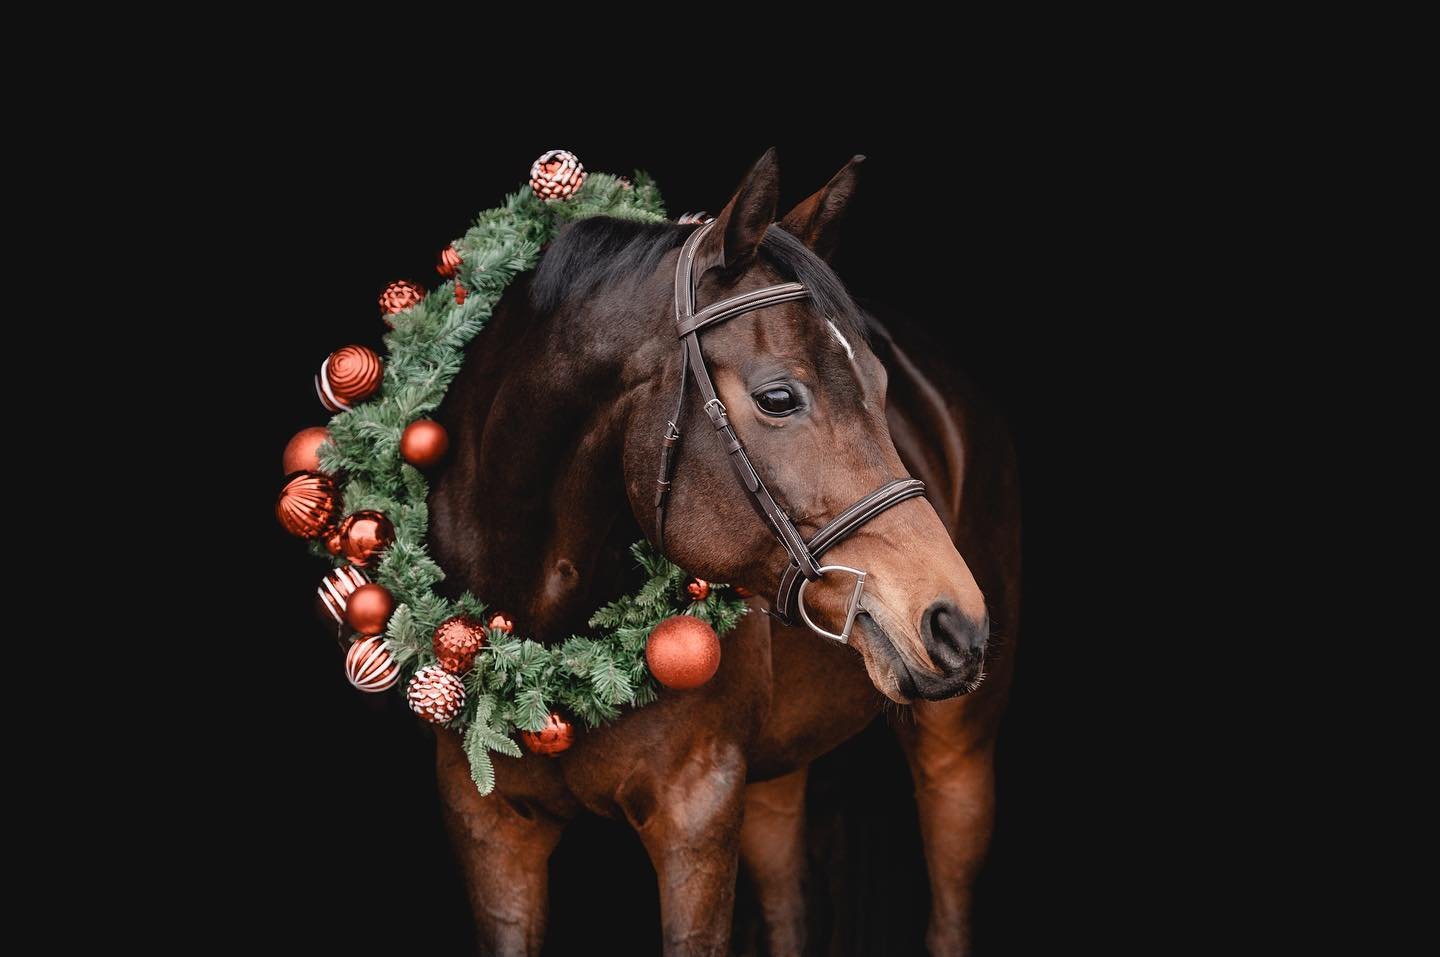 🎄🌲✨
.
.
.
#equestrainphotography #horsephotographer #equinephotographer #equinephotography #christmasphotos #holidayphotos #equestrianlife